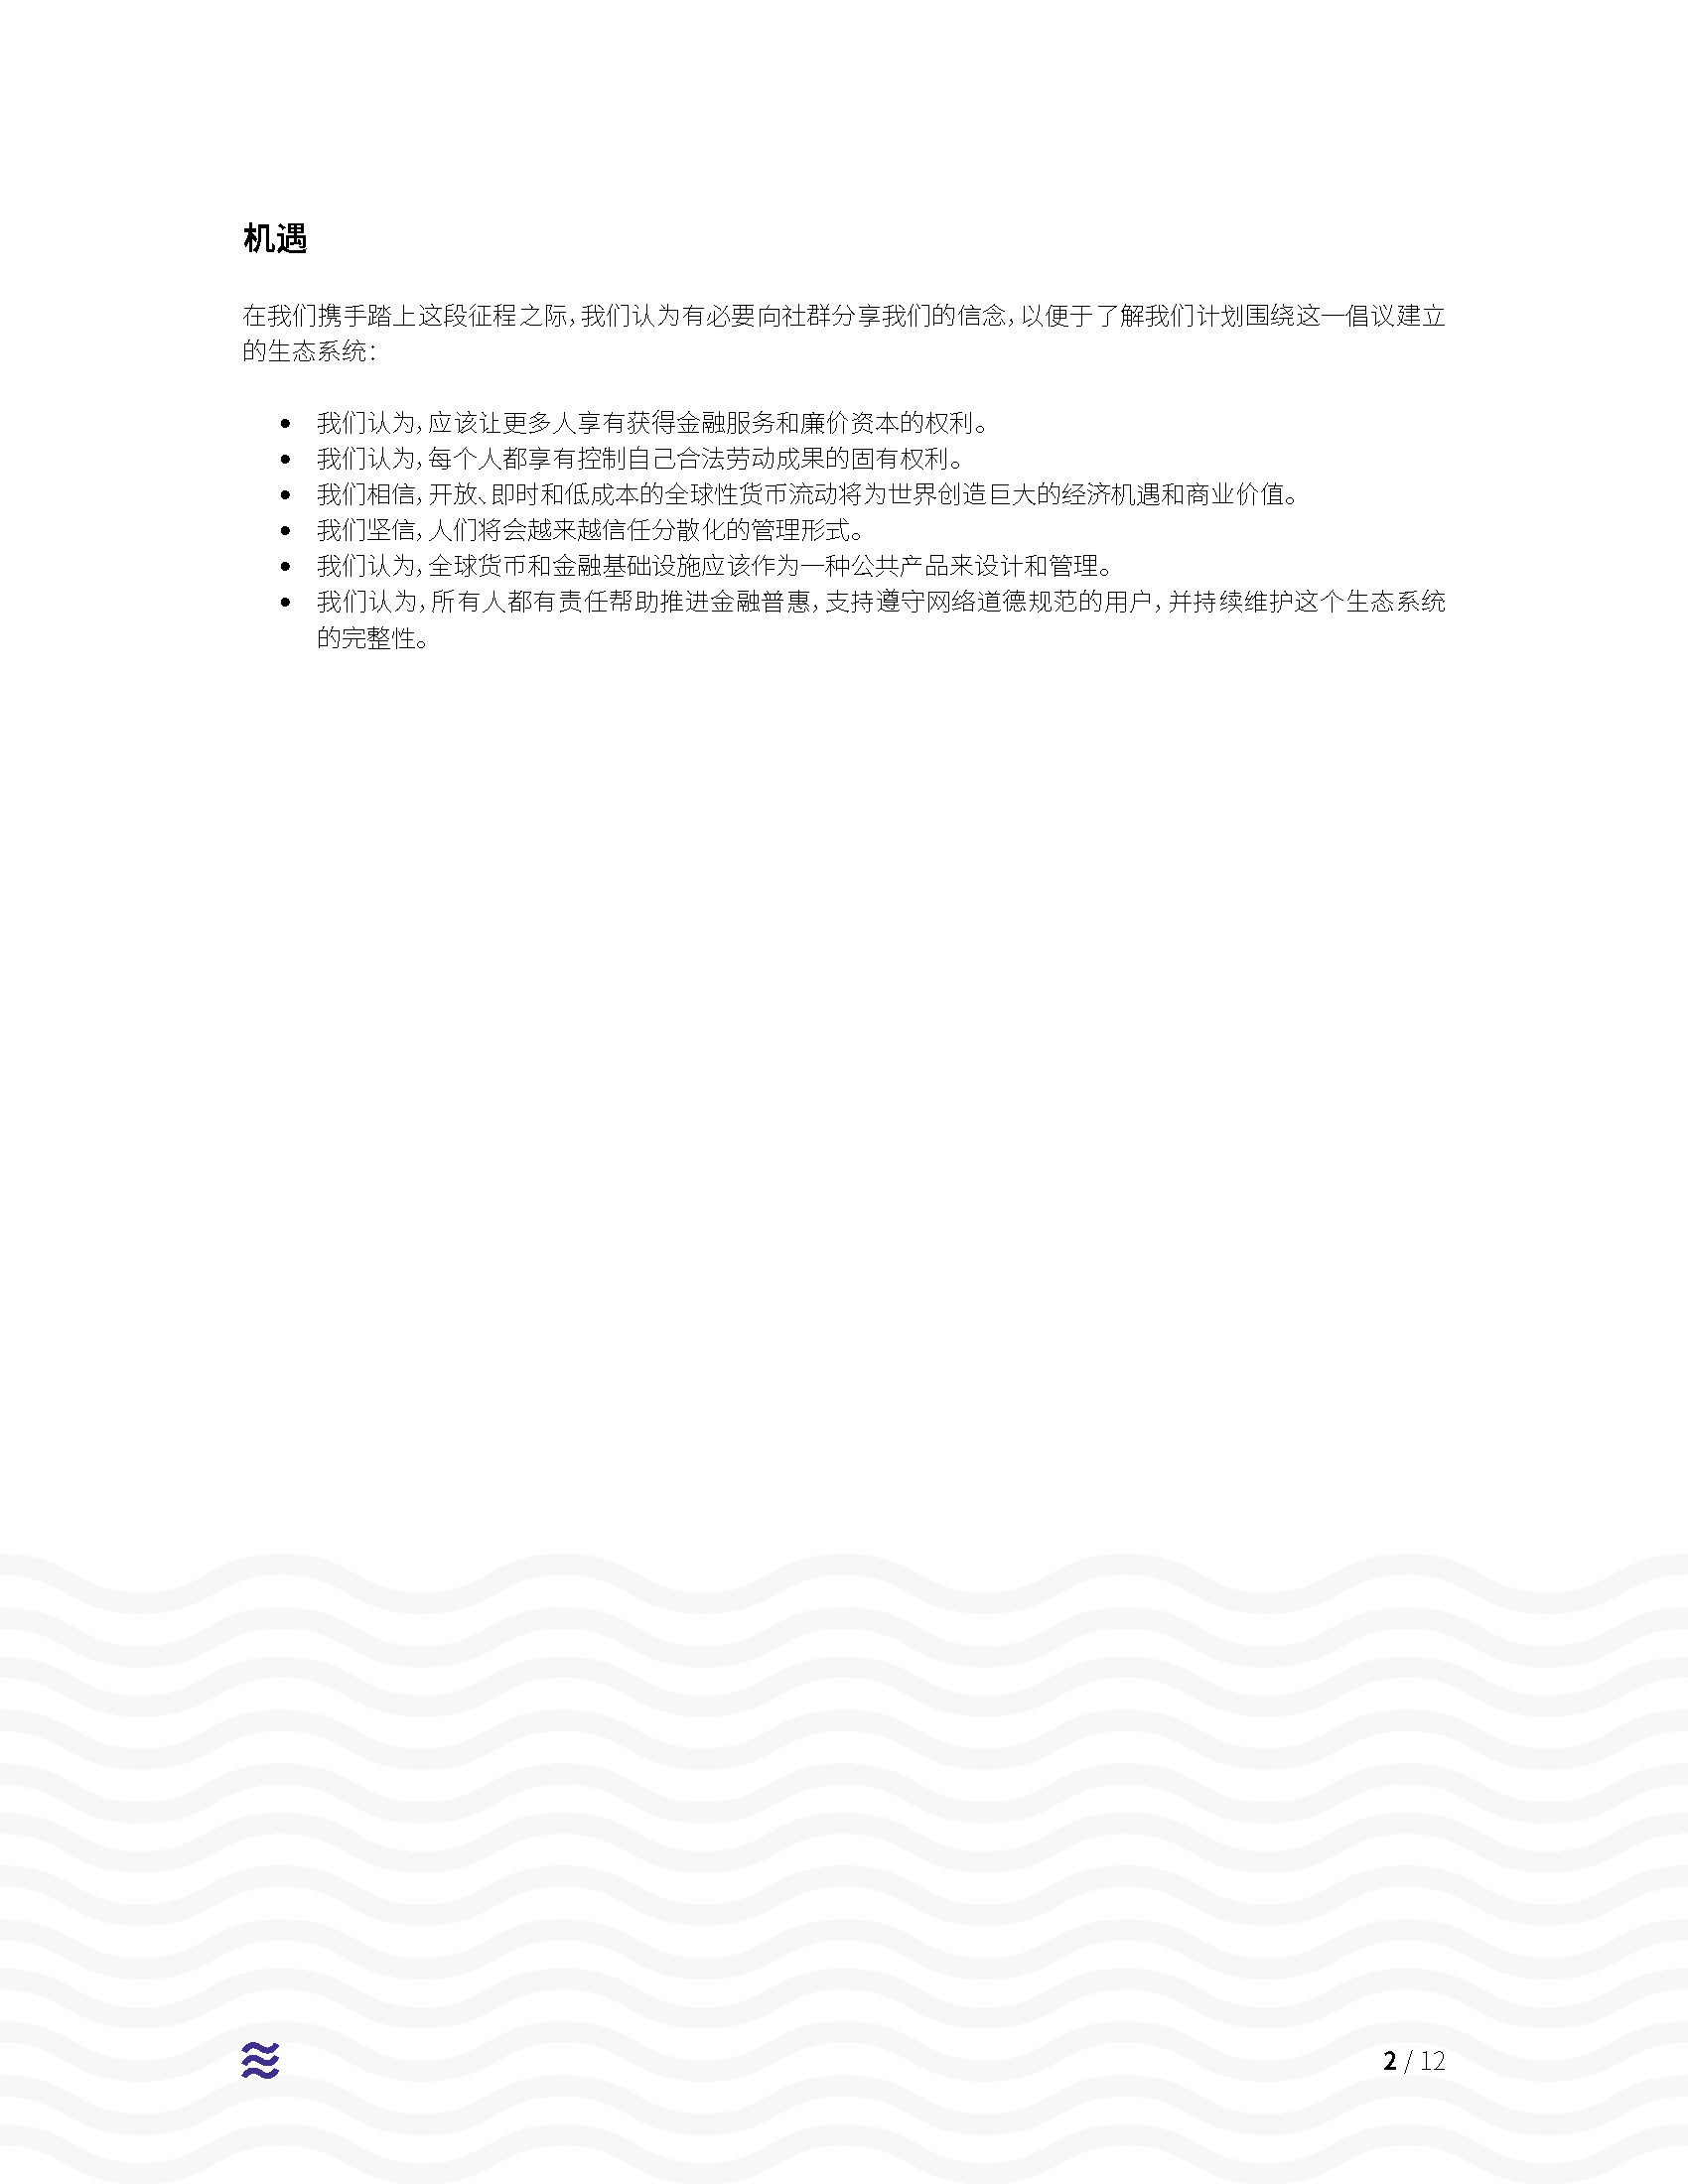 Facebook加密货币项目Libra中文白皮书配图(2)